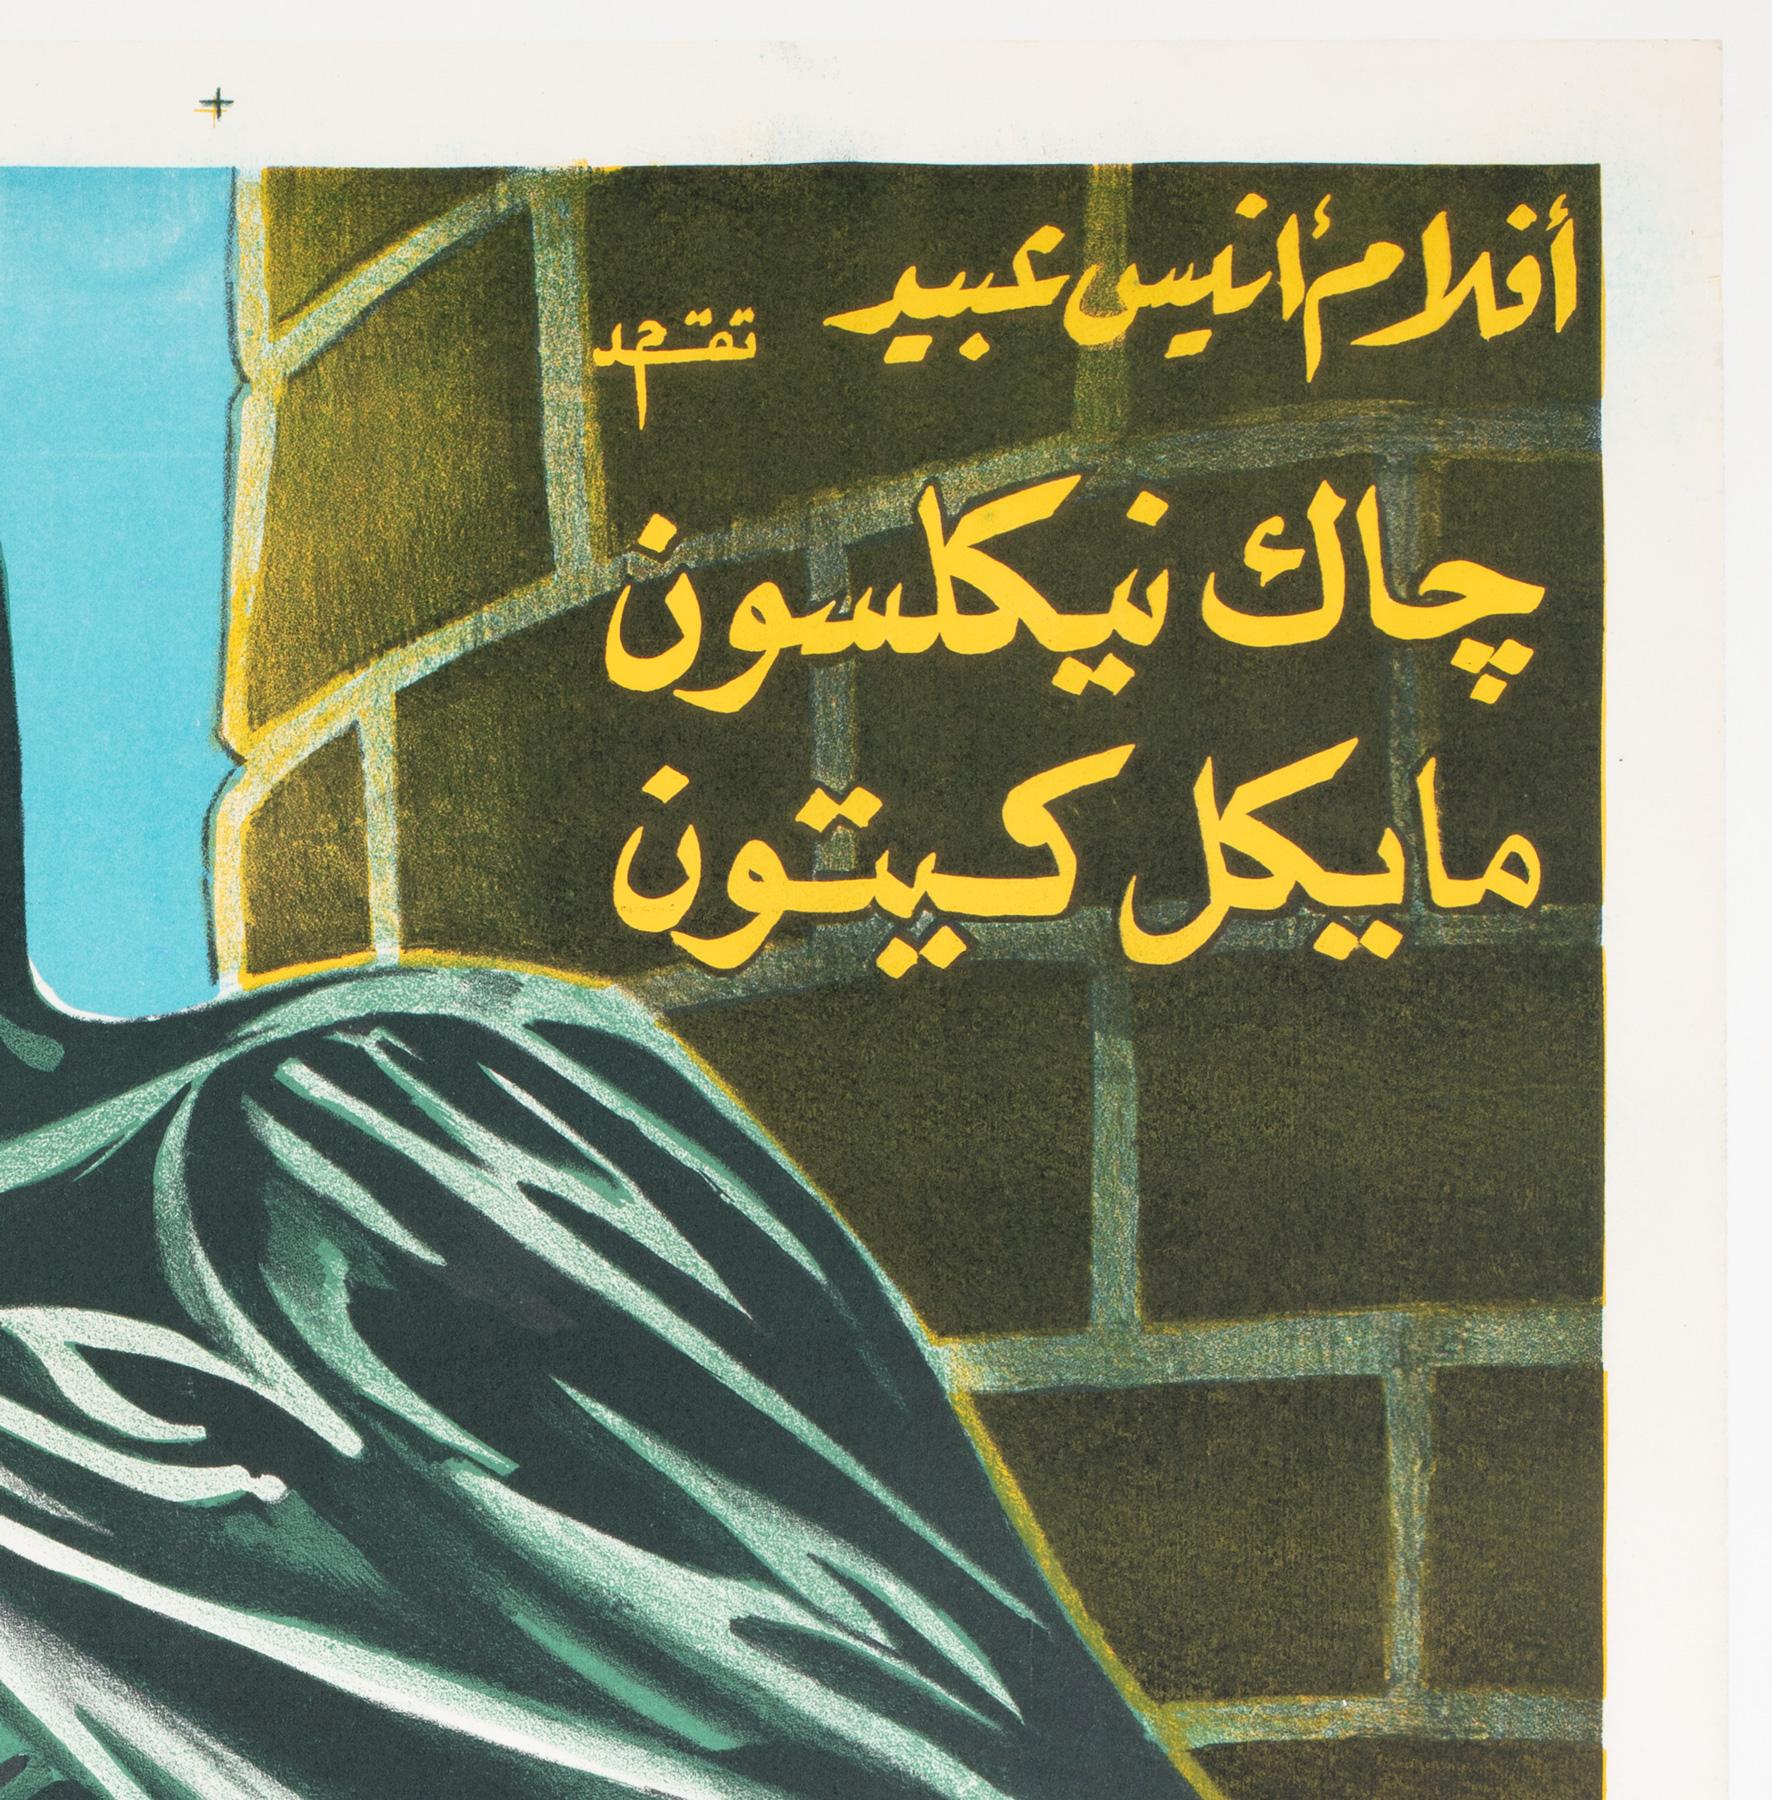 Paper Batman Original Egyptian Film Movie Poster, 1989, Linen Backed